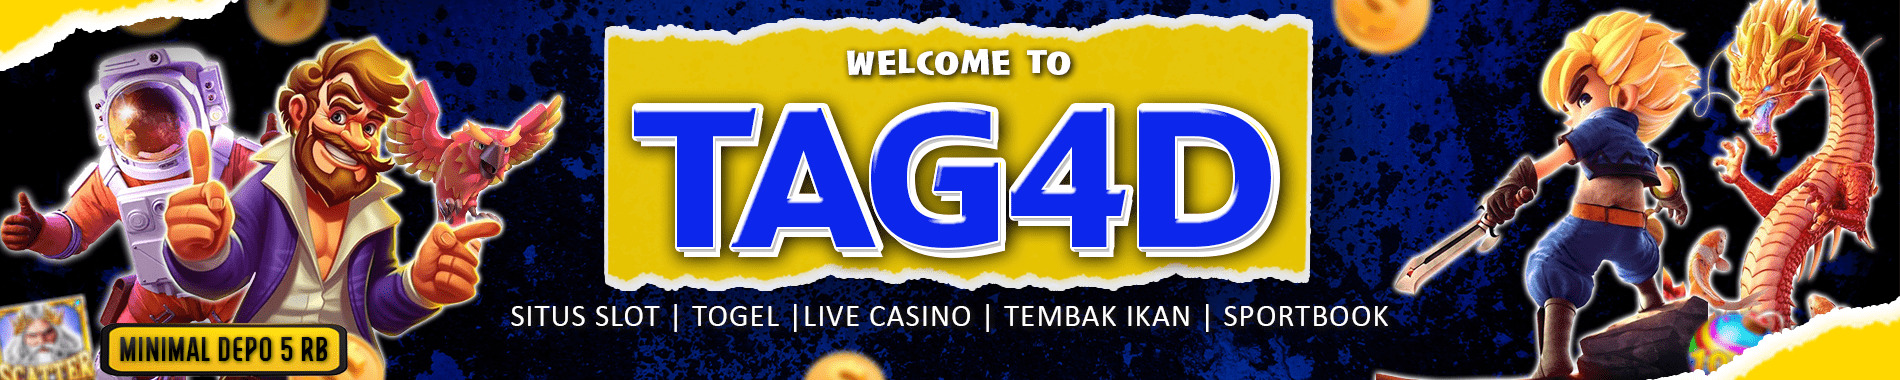 Tag4D Situs Slot Online